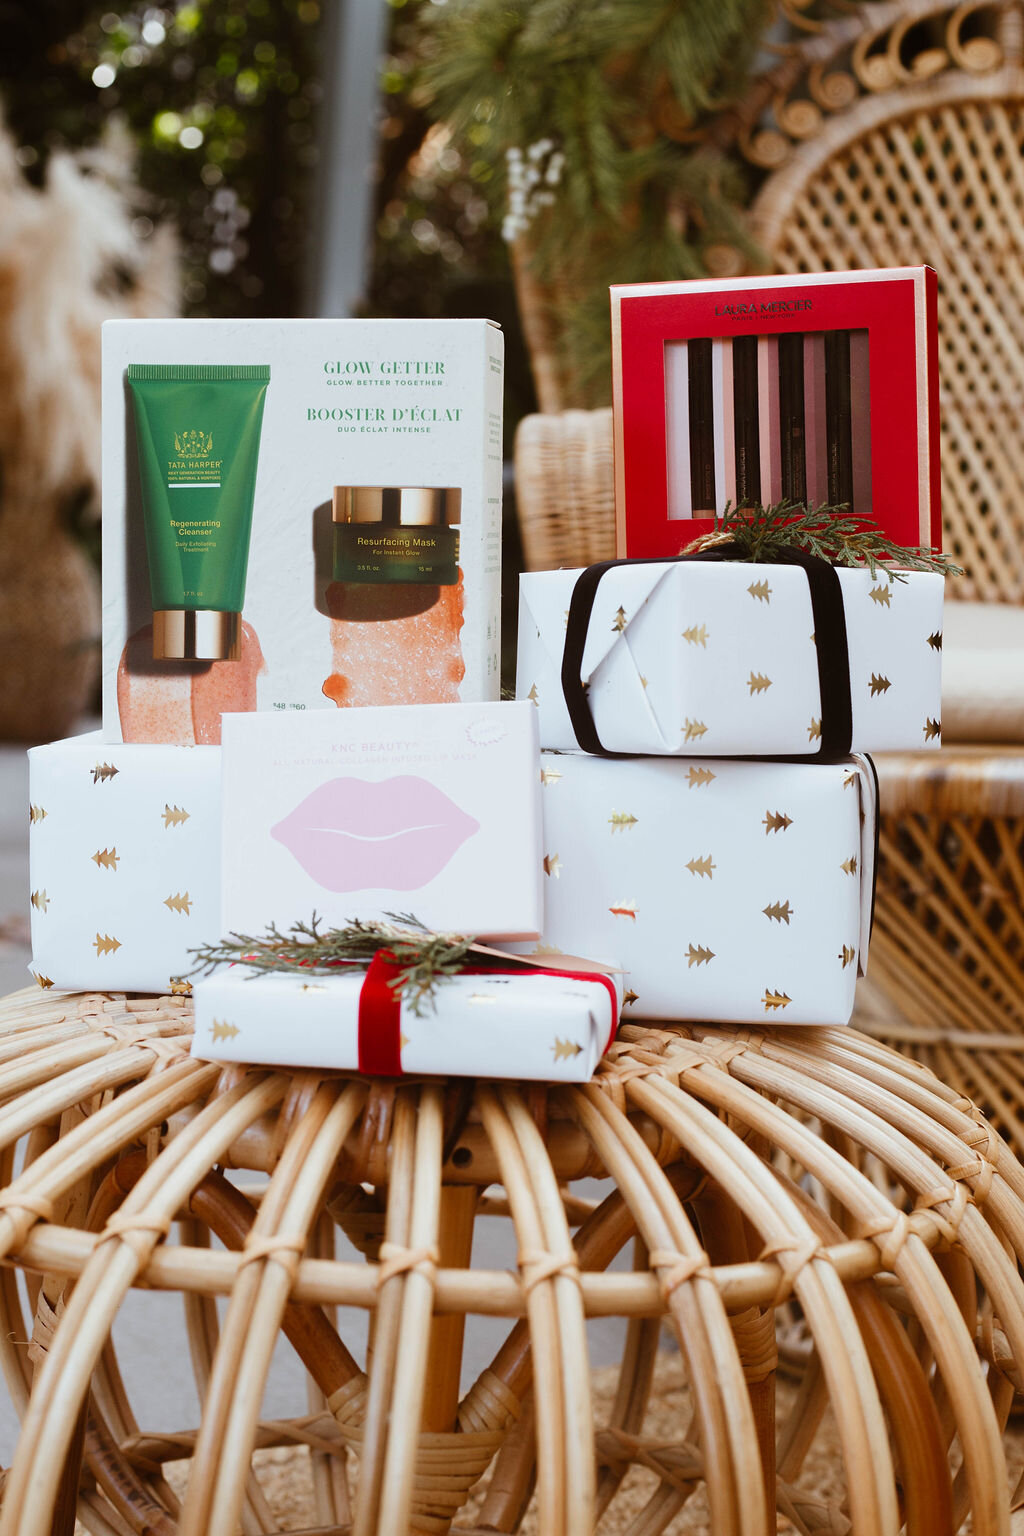 neiman marcus gift box and bag